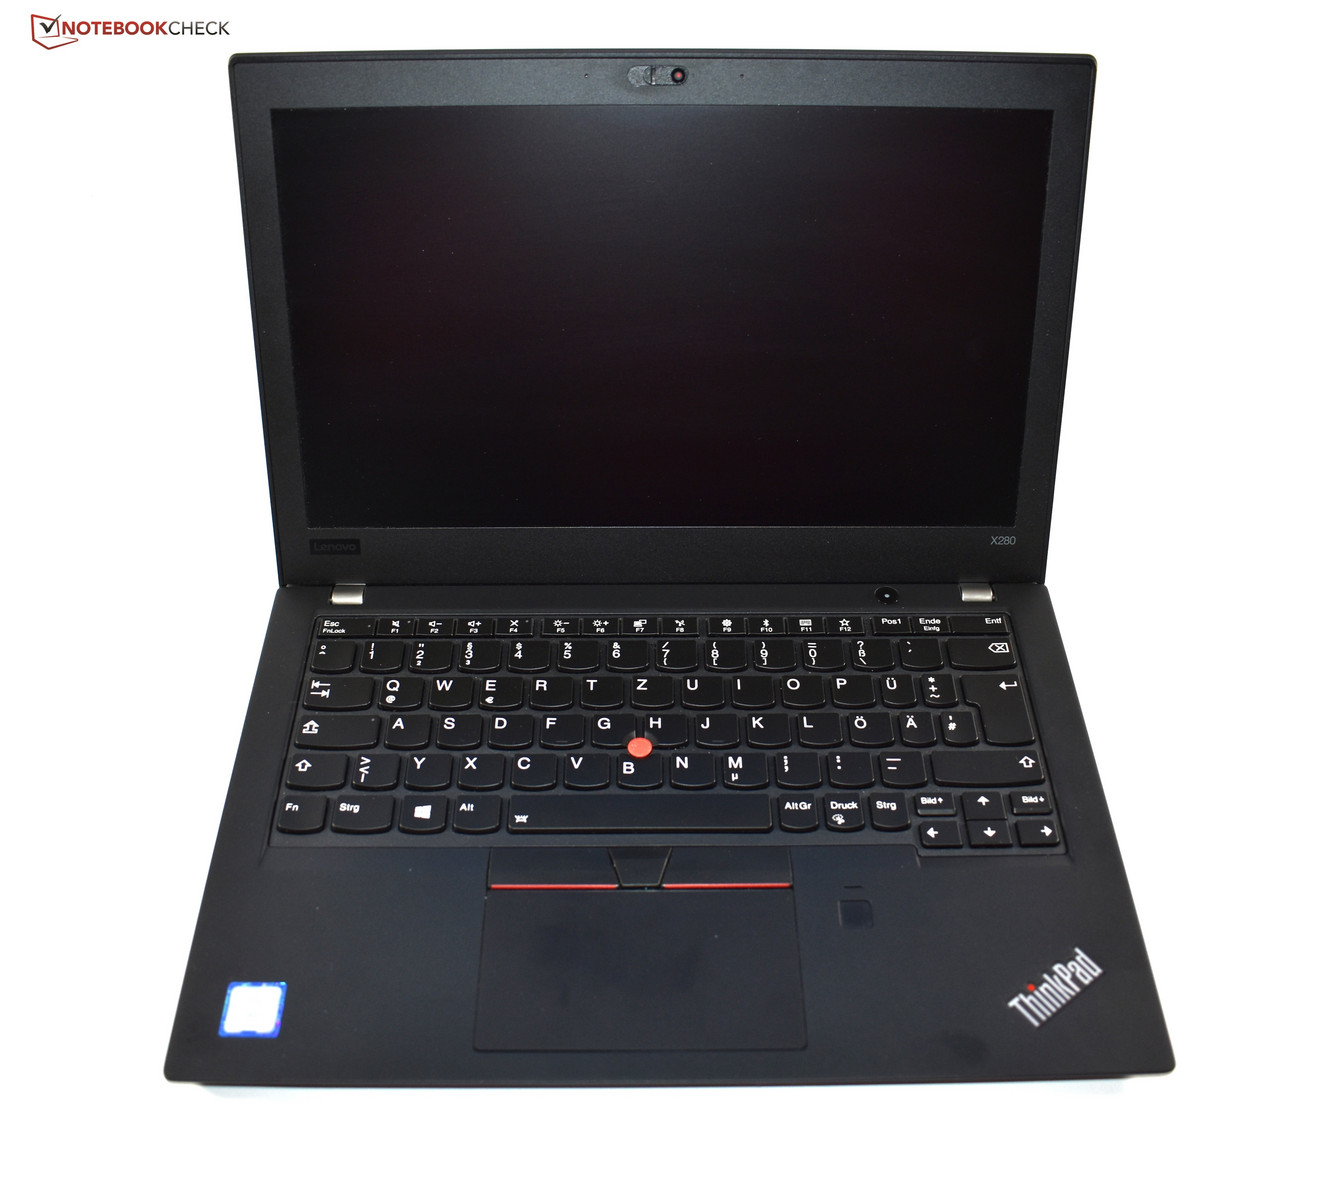 Lenovo ThinkPad X280 (i5-8250U, FHD) Laptop Review - NotebookCheck.net